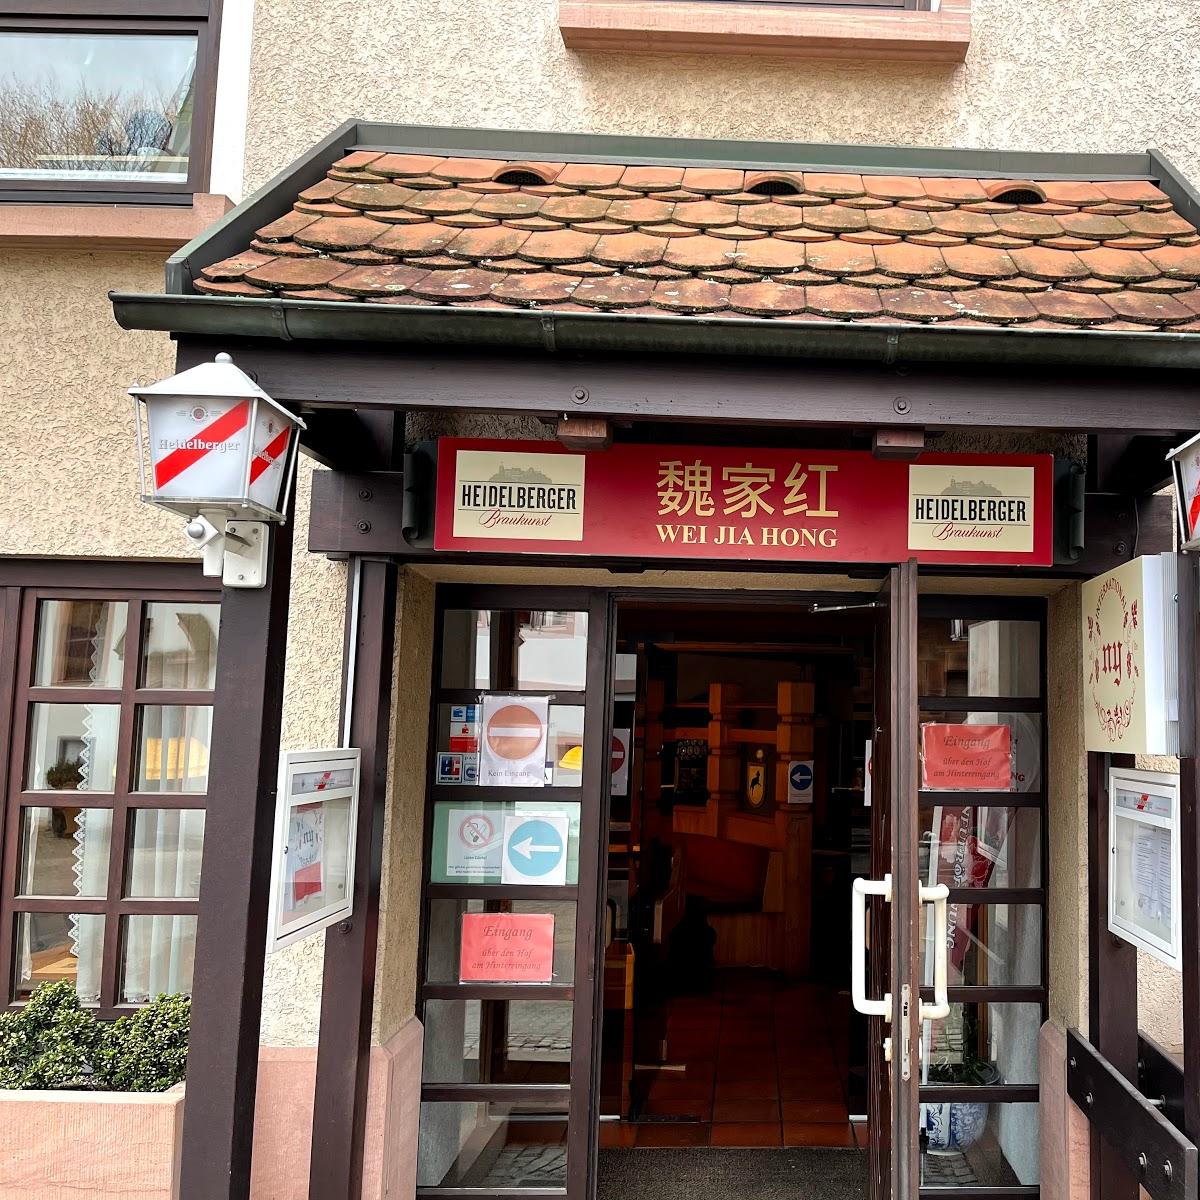 Restaurant "Wei Jia Hong China Restaurant" in Heidelberg